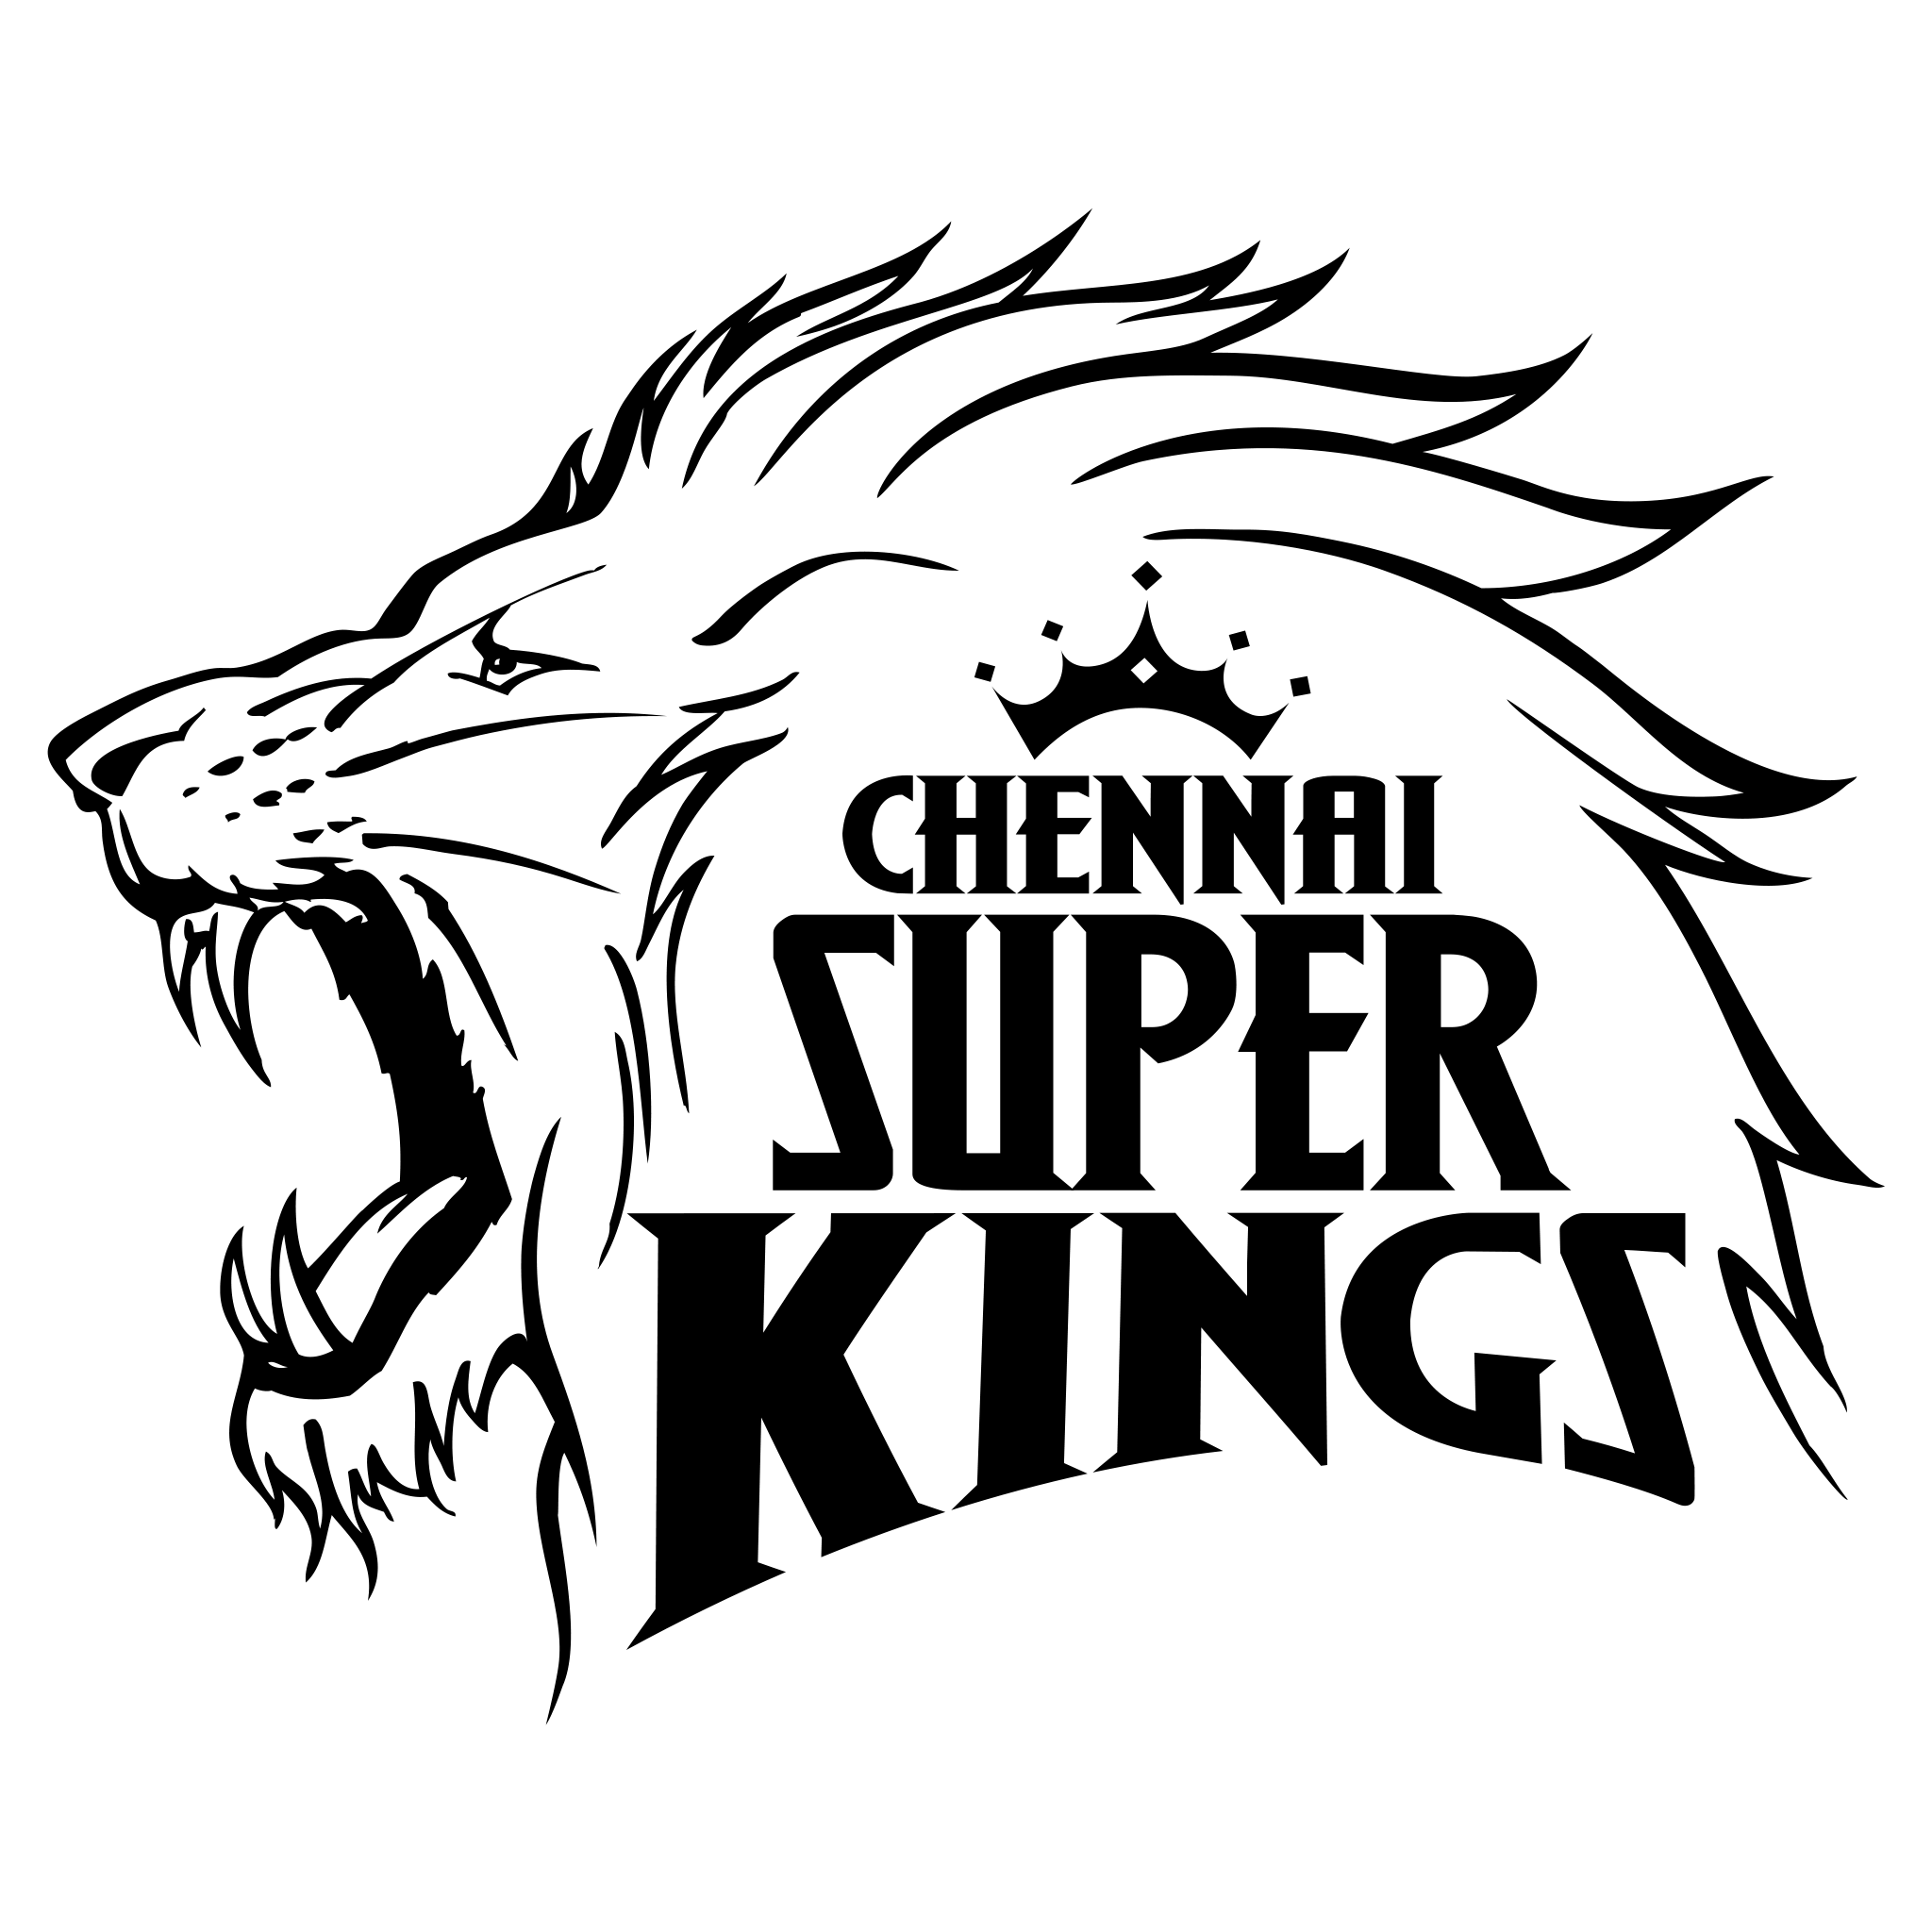 CSK Logo PNG Transparent & SVG Vector - Freebie Supply